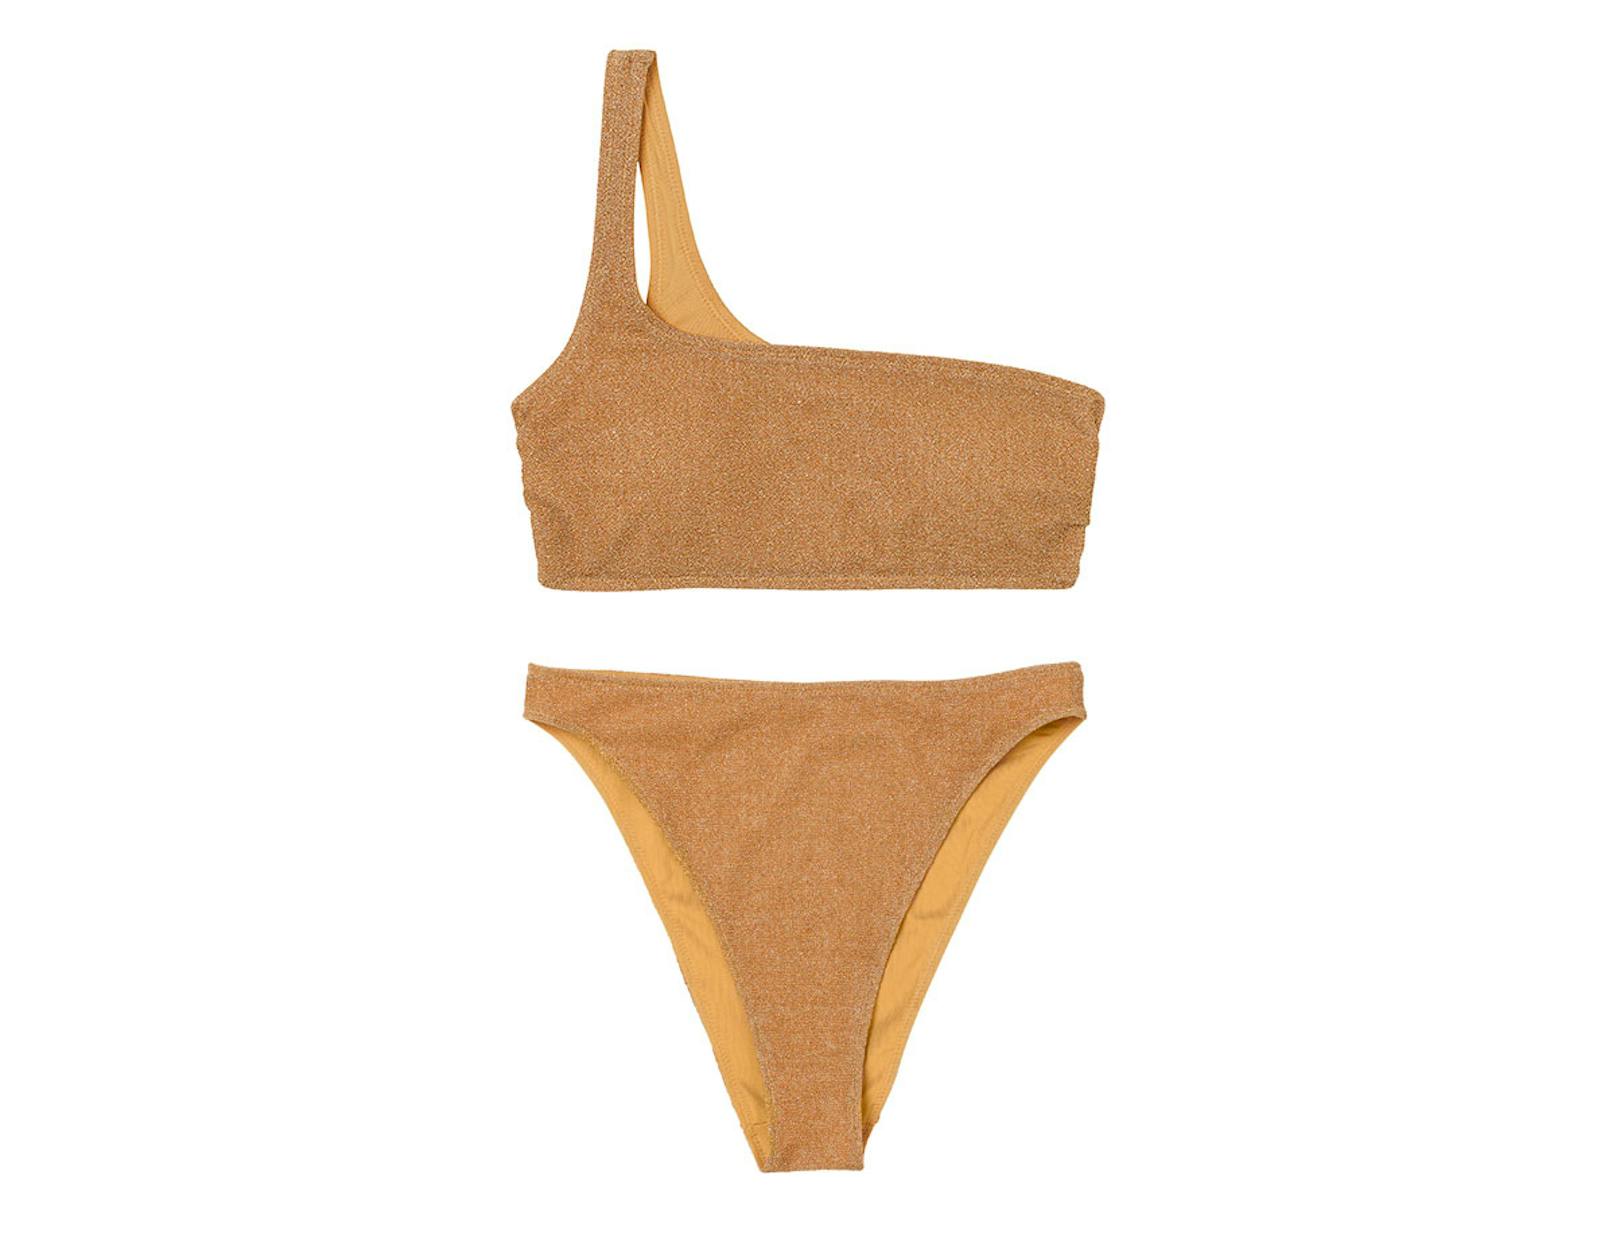 One-Shoulder-Bikini in Gold von <a href="https://www2.hm.com/de_at/productpage.0864013001.html">H&amp;M</a>, 27,98 Euro.